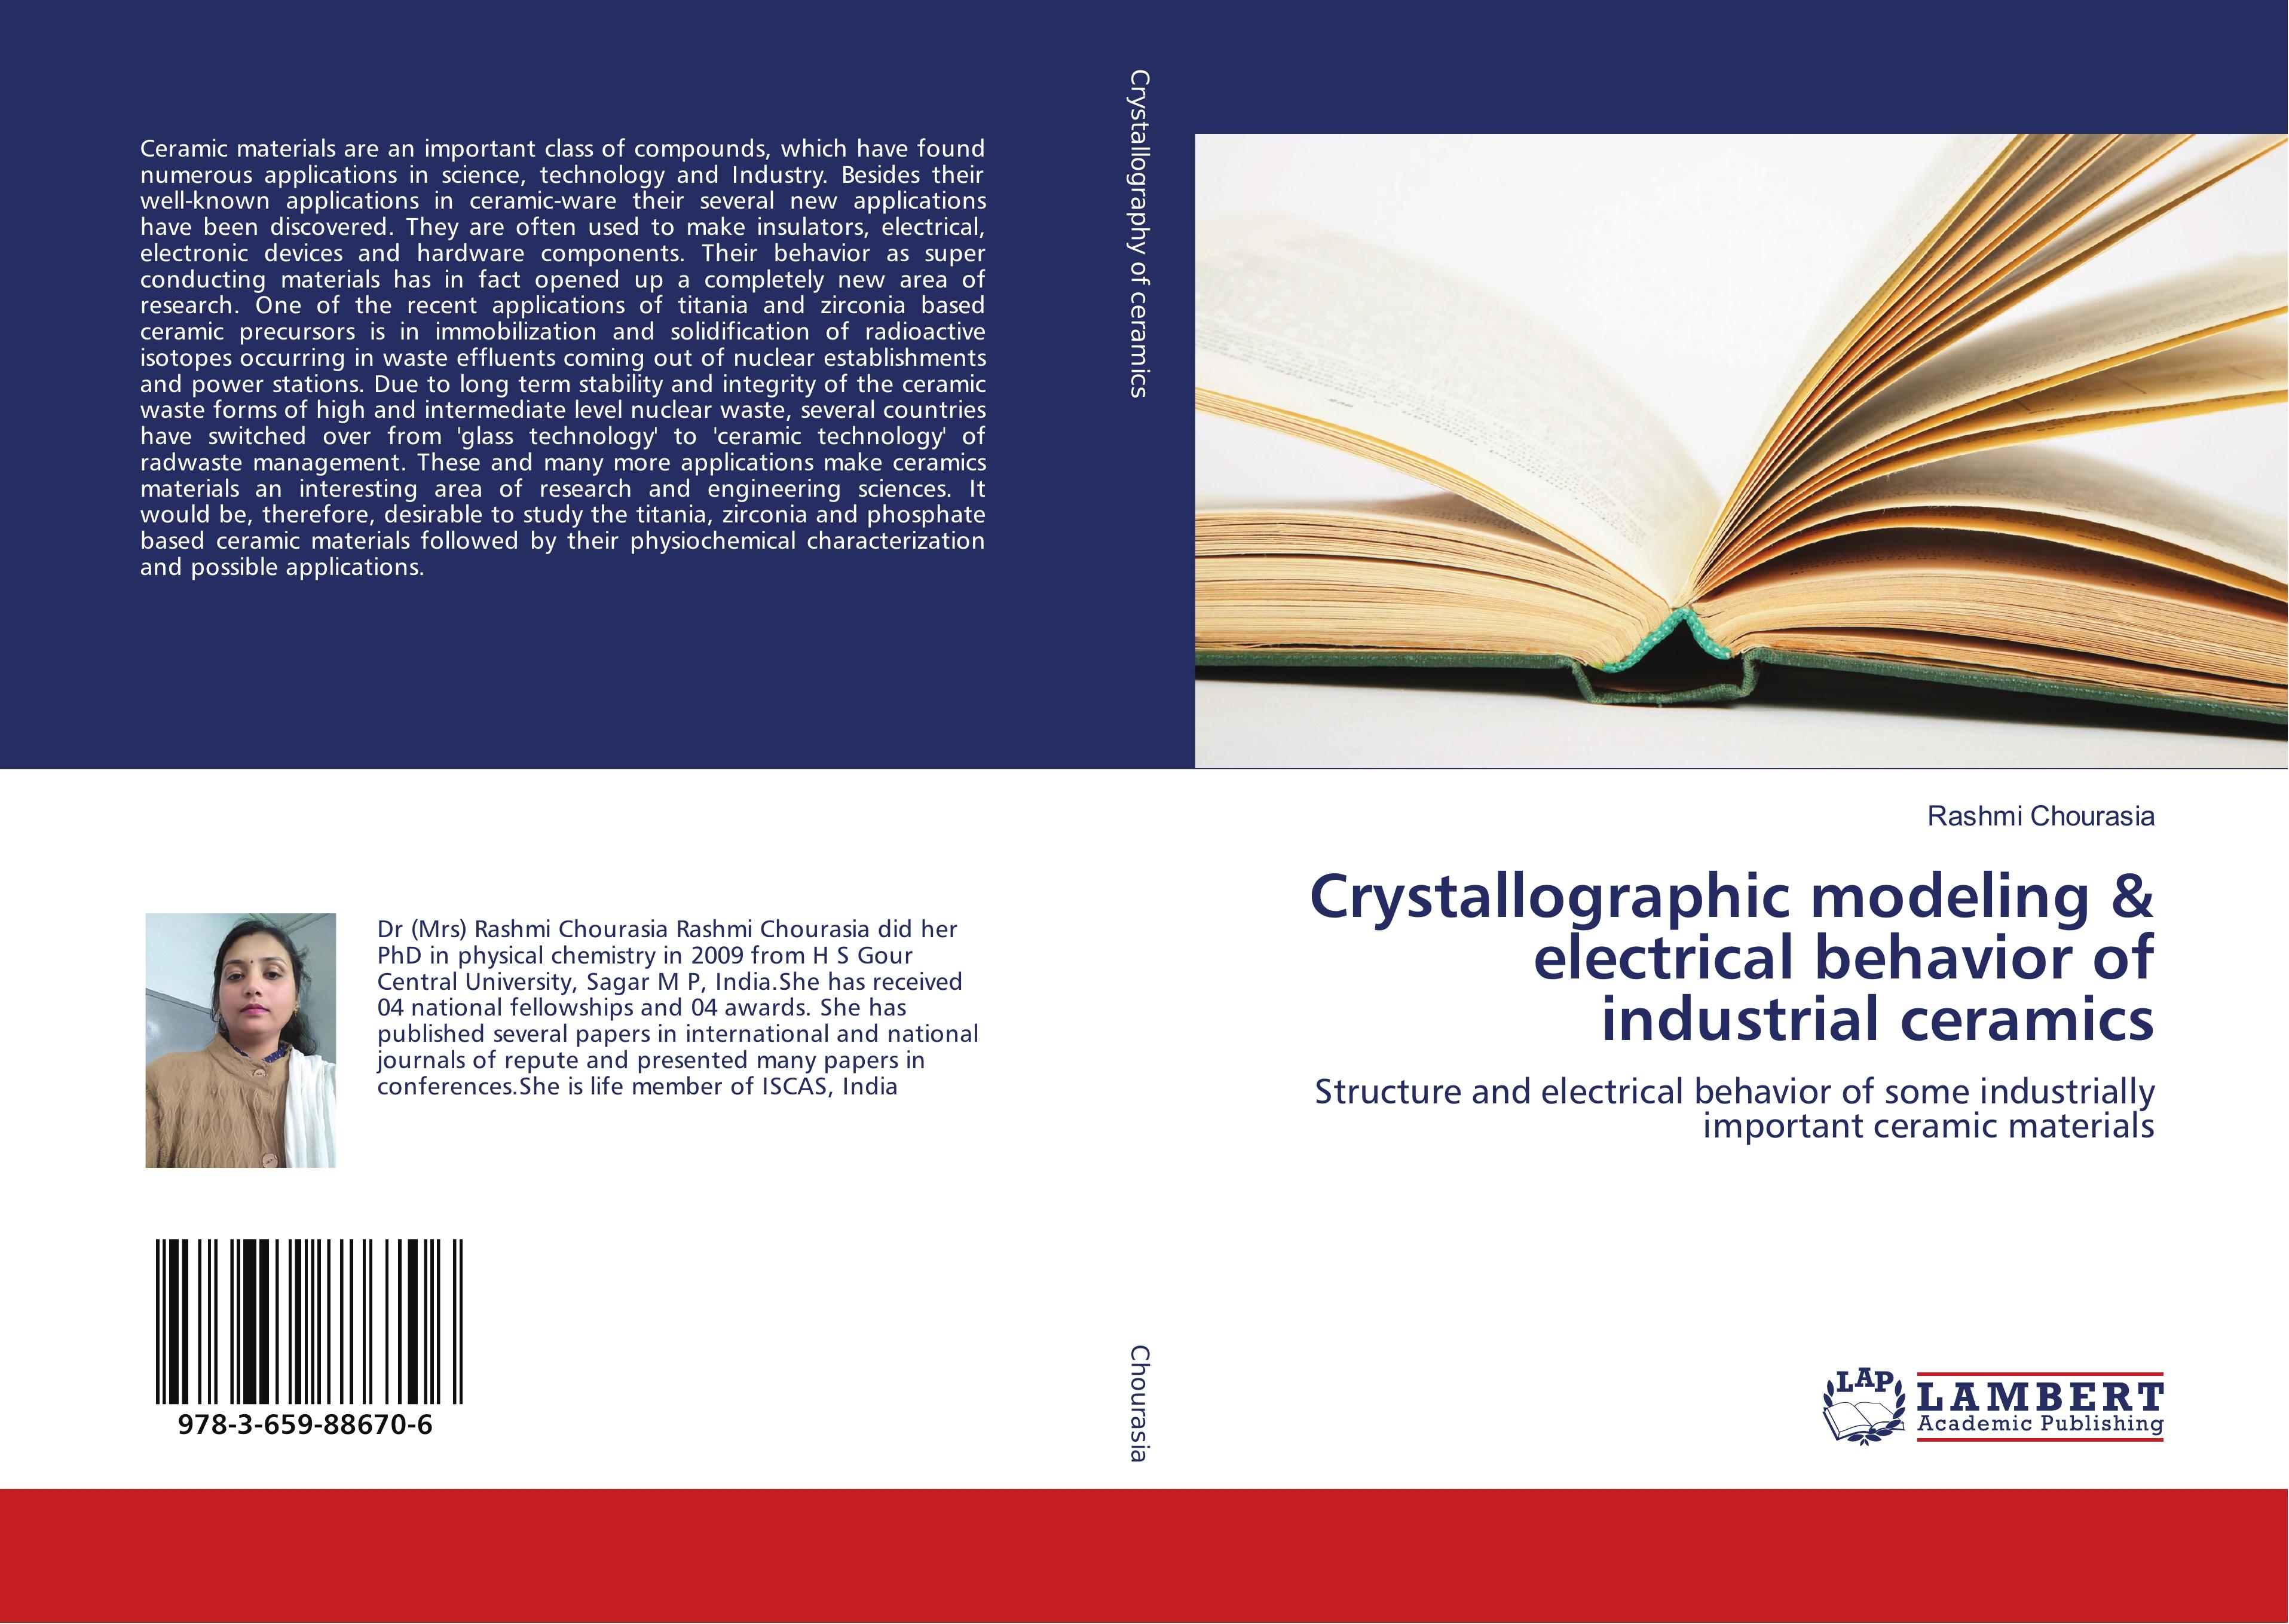 Crystallographic modeling & electrical behavior of industrial ceramics - Rashmi Chourasia